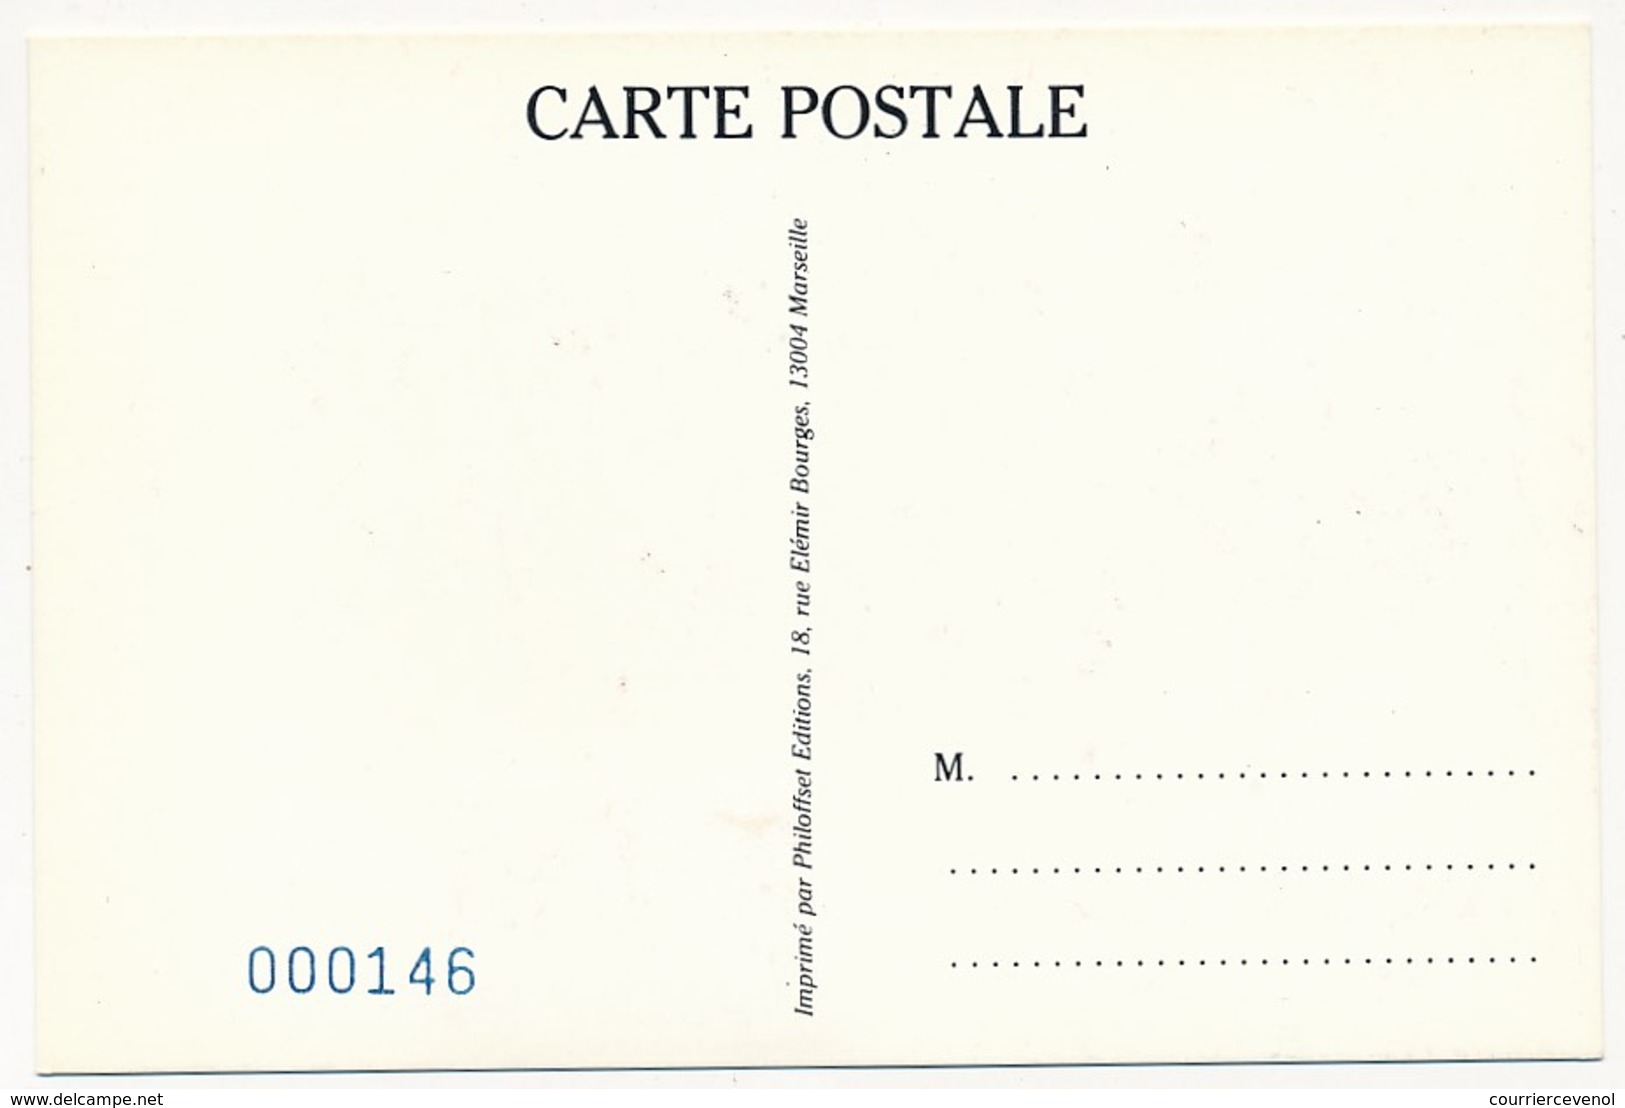 FRANCE => Carte Postale + 1,80F Marseille - Inauguration De La Gare St Charles - 1983 Signée BRUNA Dessinateur Carte - Trenes